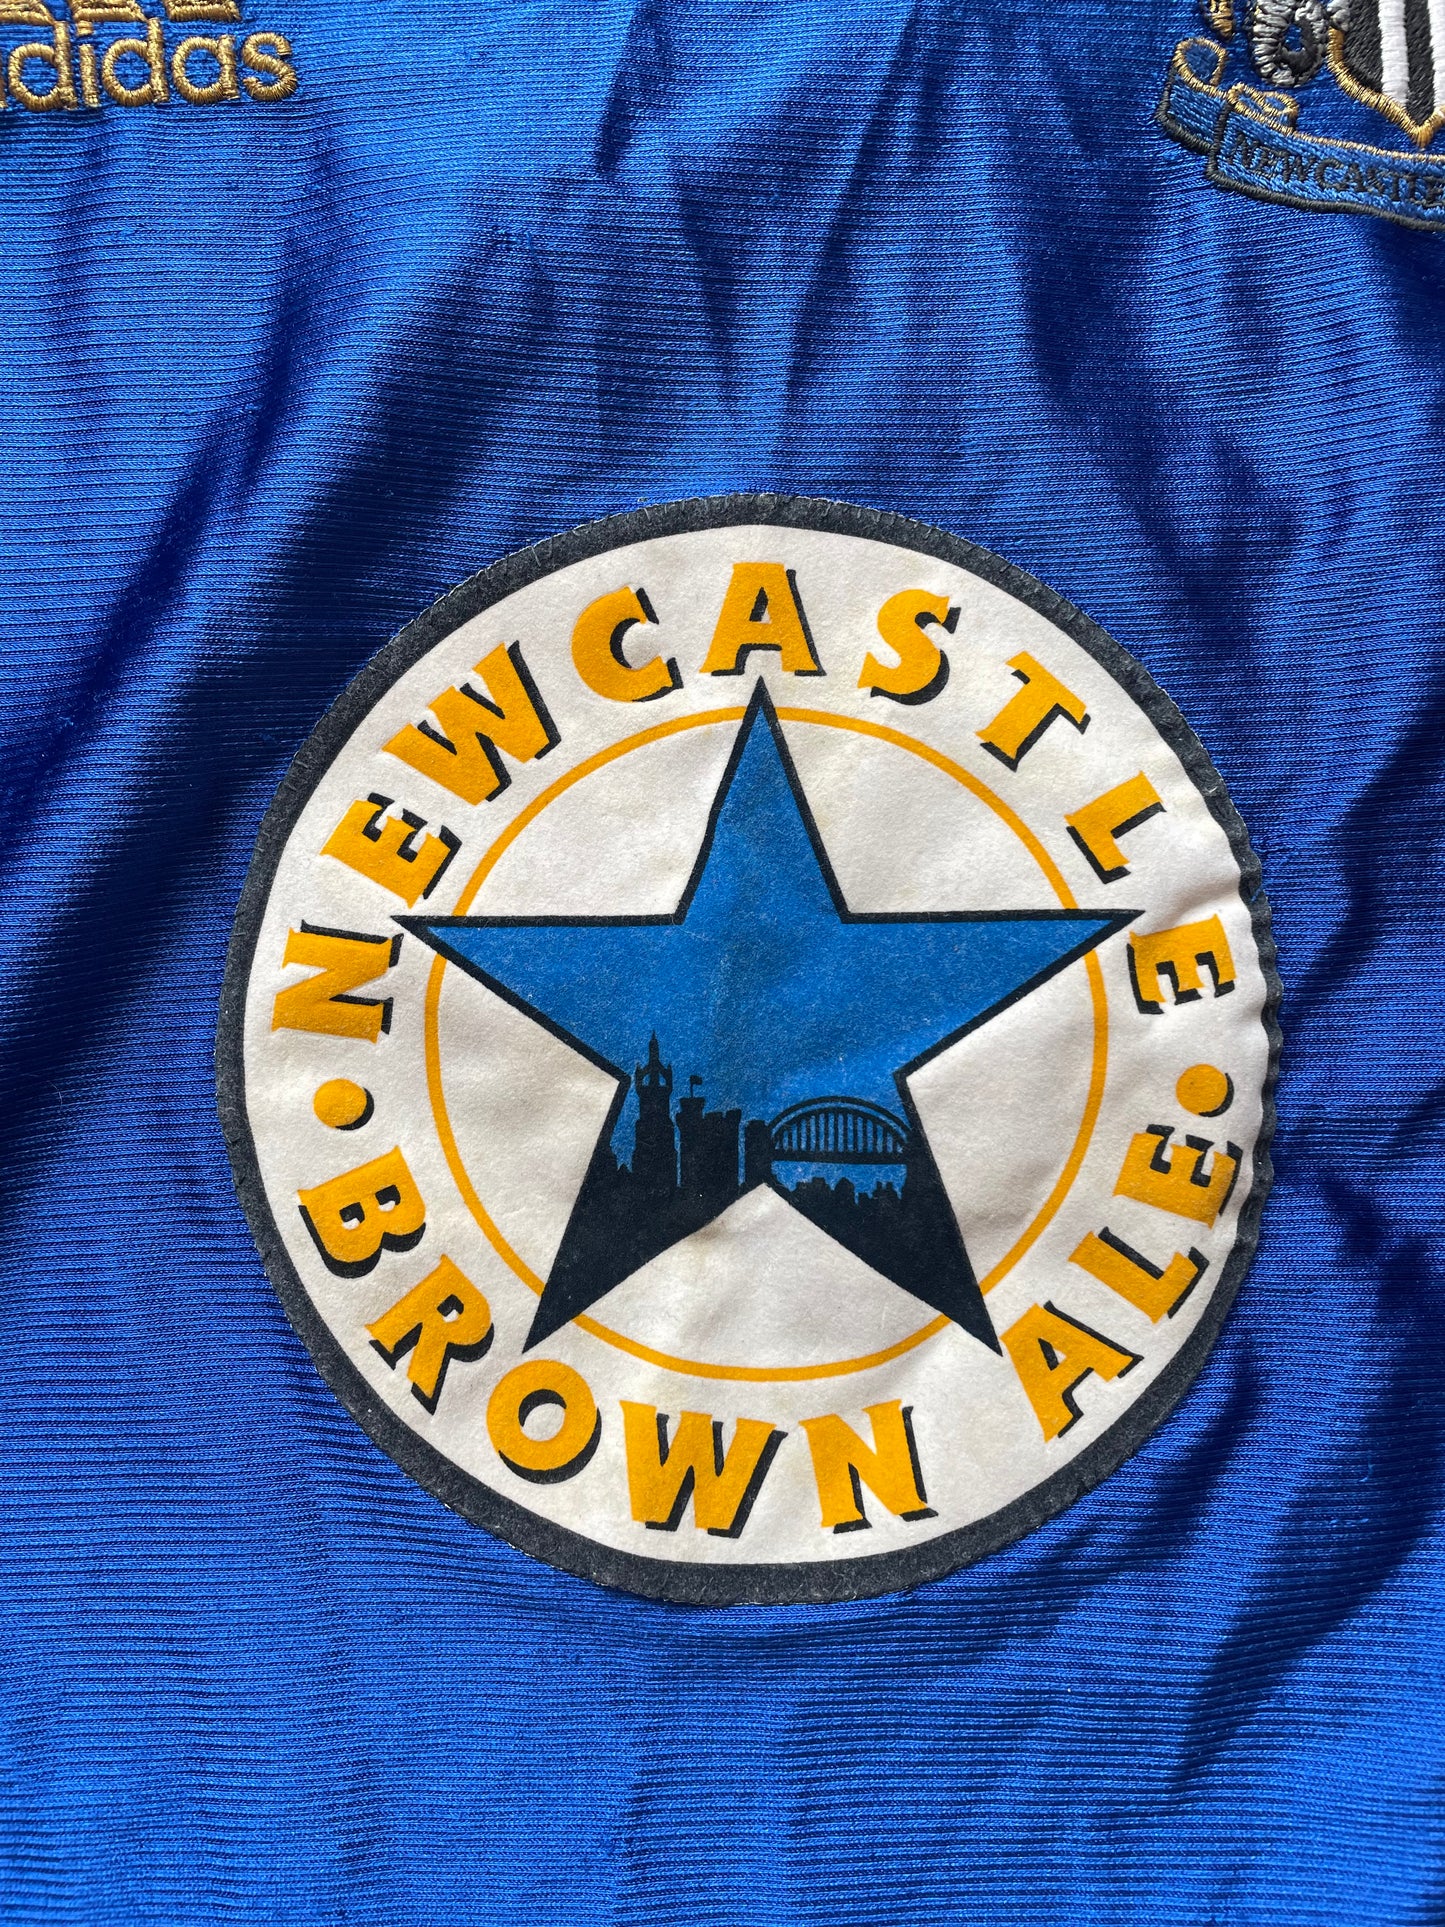 Newcastle 1998 Away Shirt (good) Adults XS/Youths 164